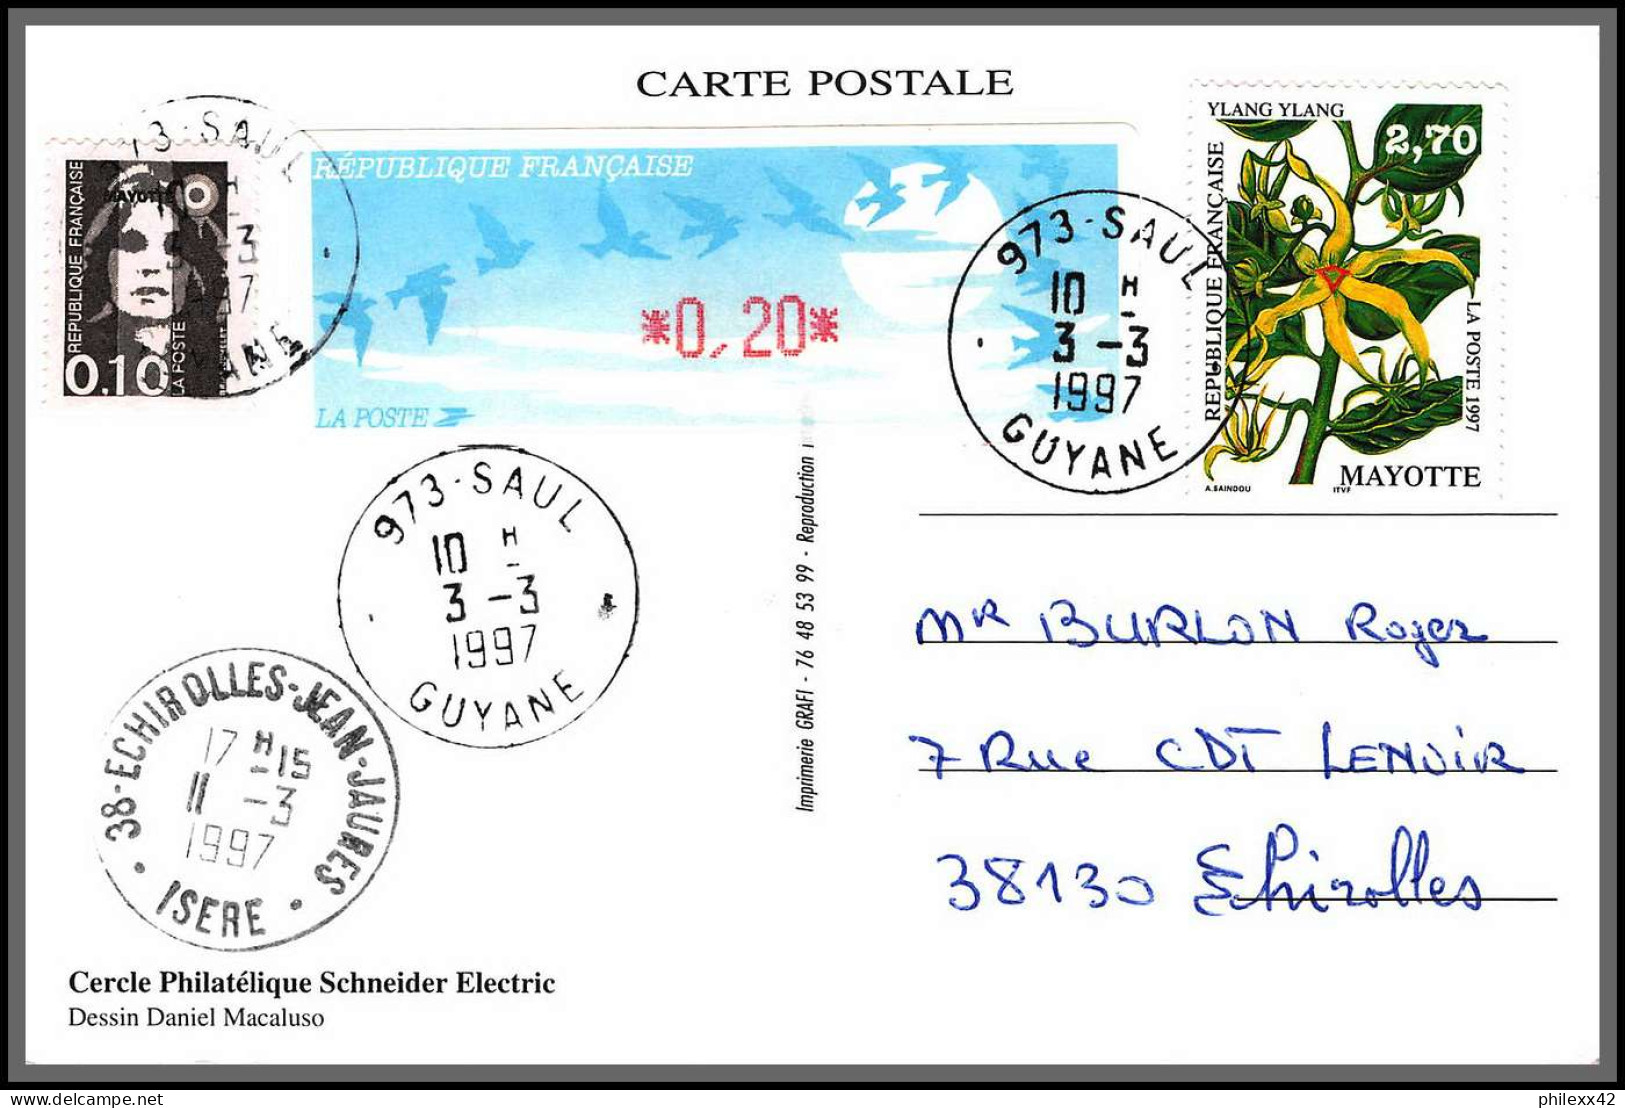 74328 Mixte Atm Briat 3/3/1997 Saul Guyane Echirolles Isère France Carte Postcard Colonies Seyssin - Lettres & Documents